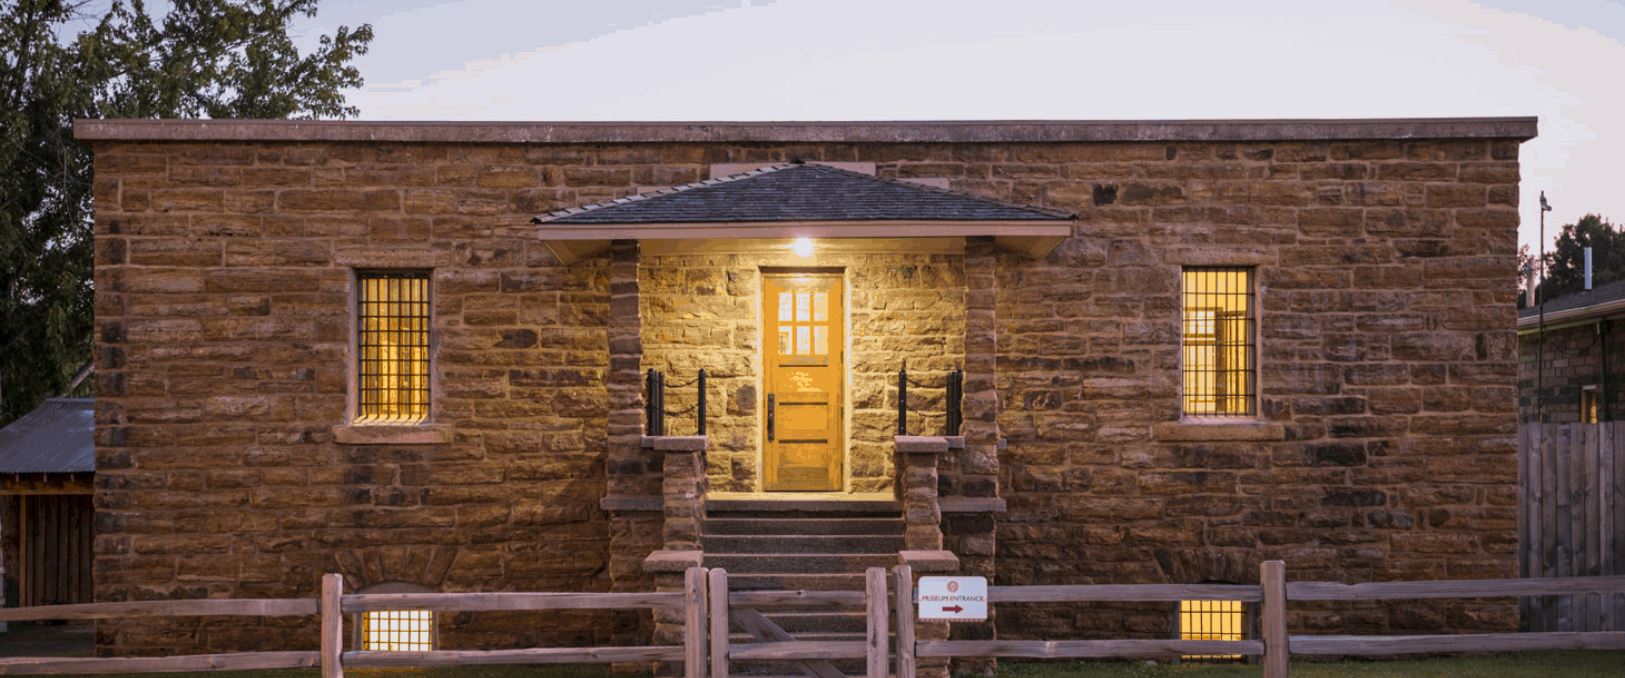 Cherokee National Prison Museum